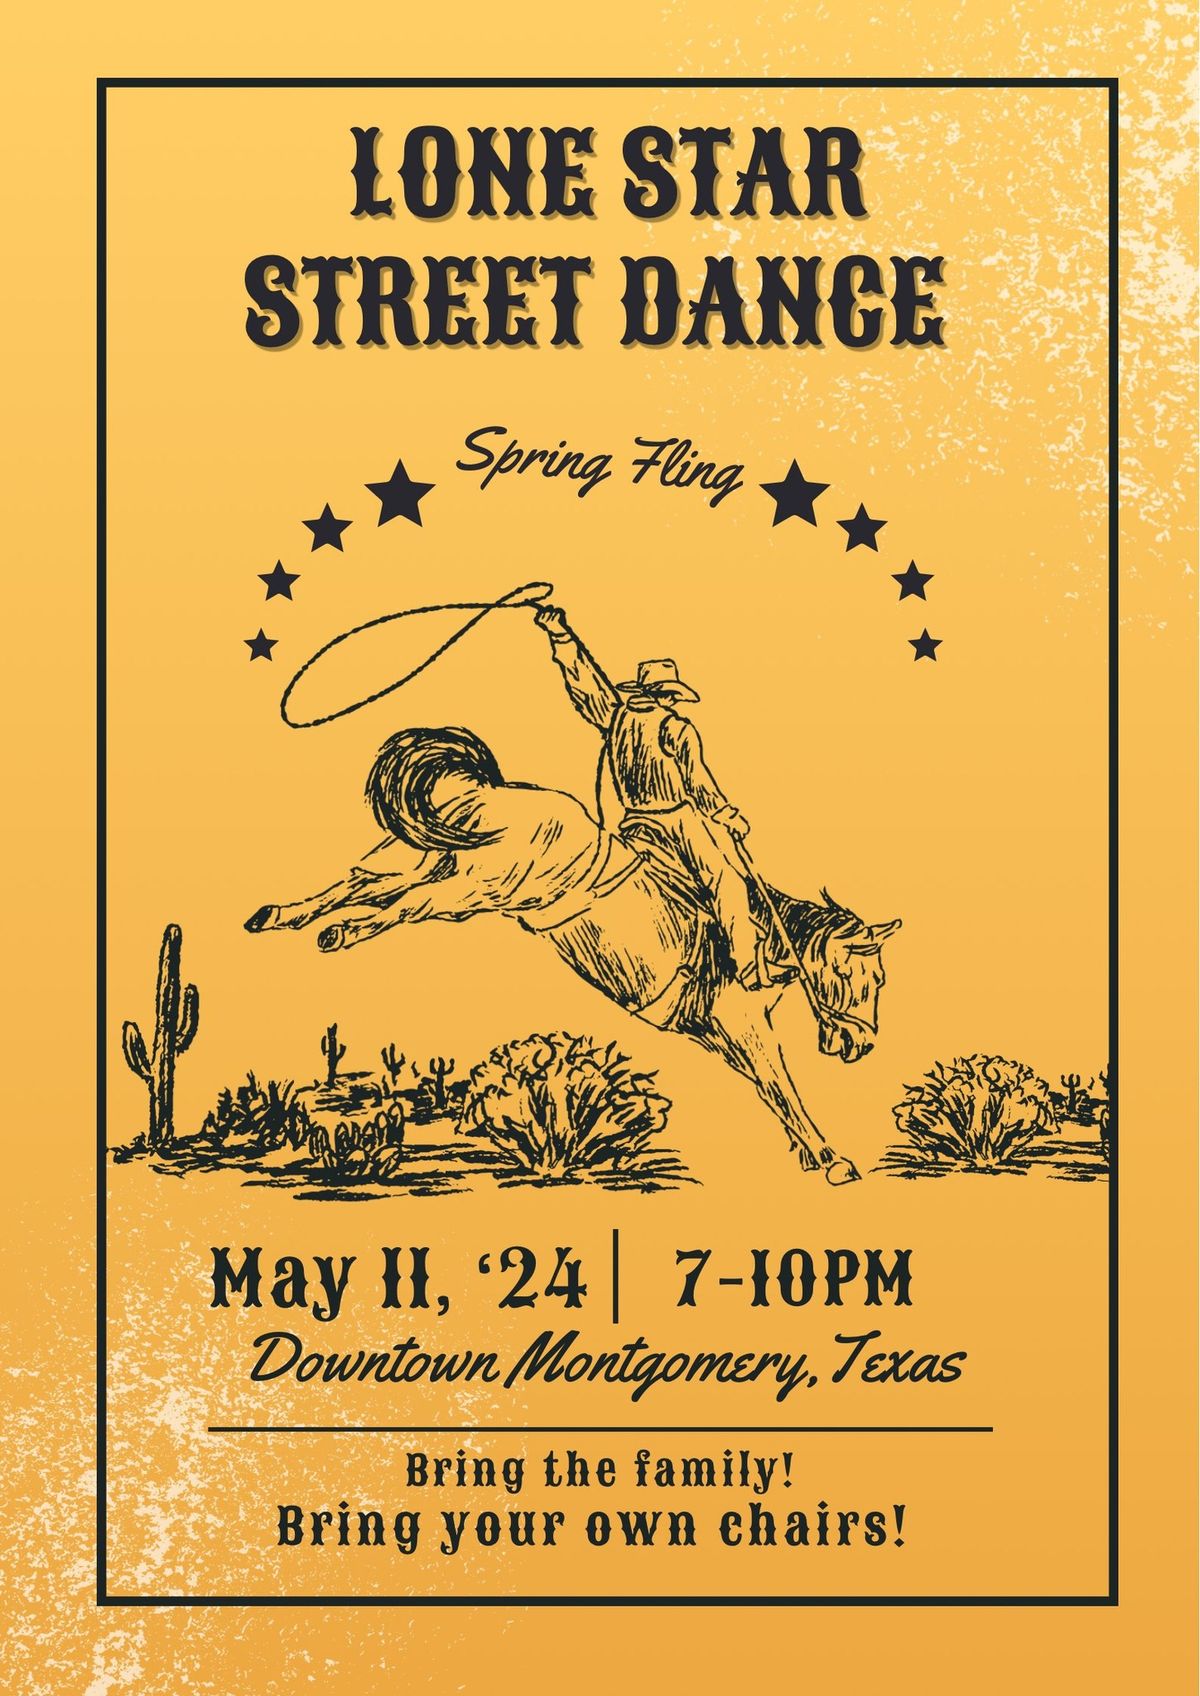 Lone Star Street Dance - Spring Fling 